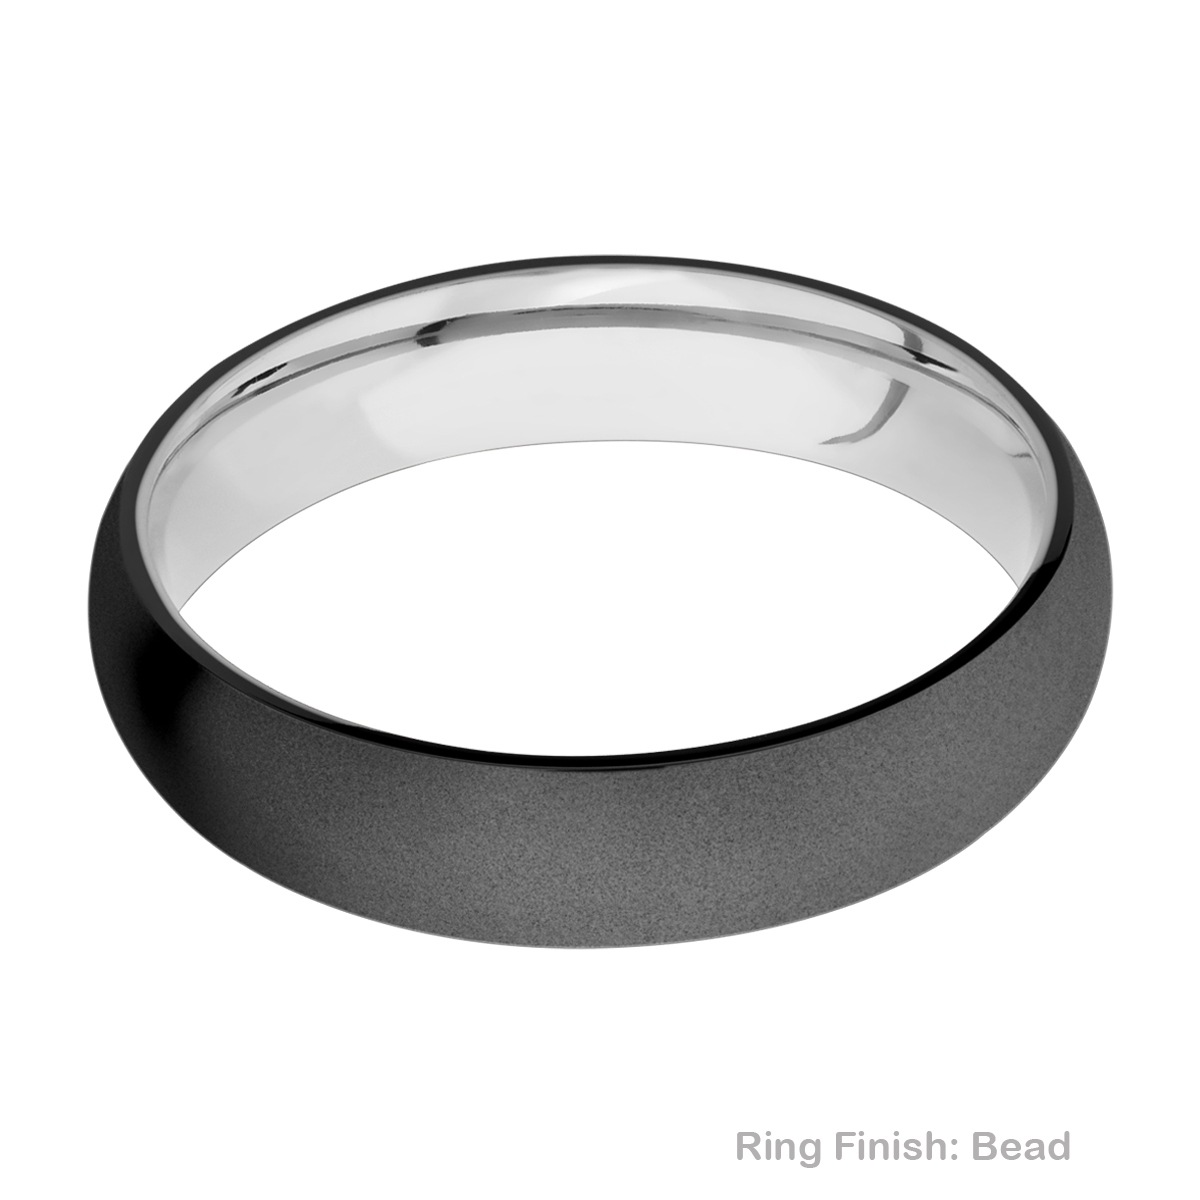 Lashbrook CCSLEEVEZ5D Zirconium and Cobalt Chrome Wedding Ring or Band Alternative View 2